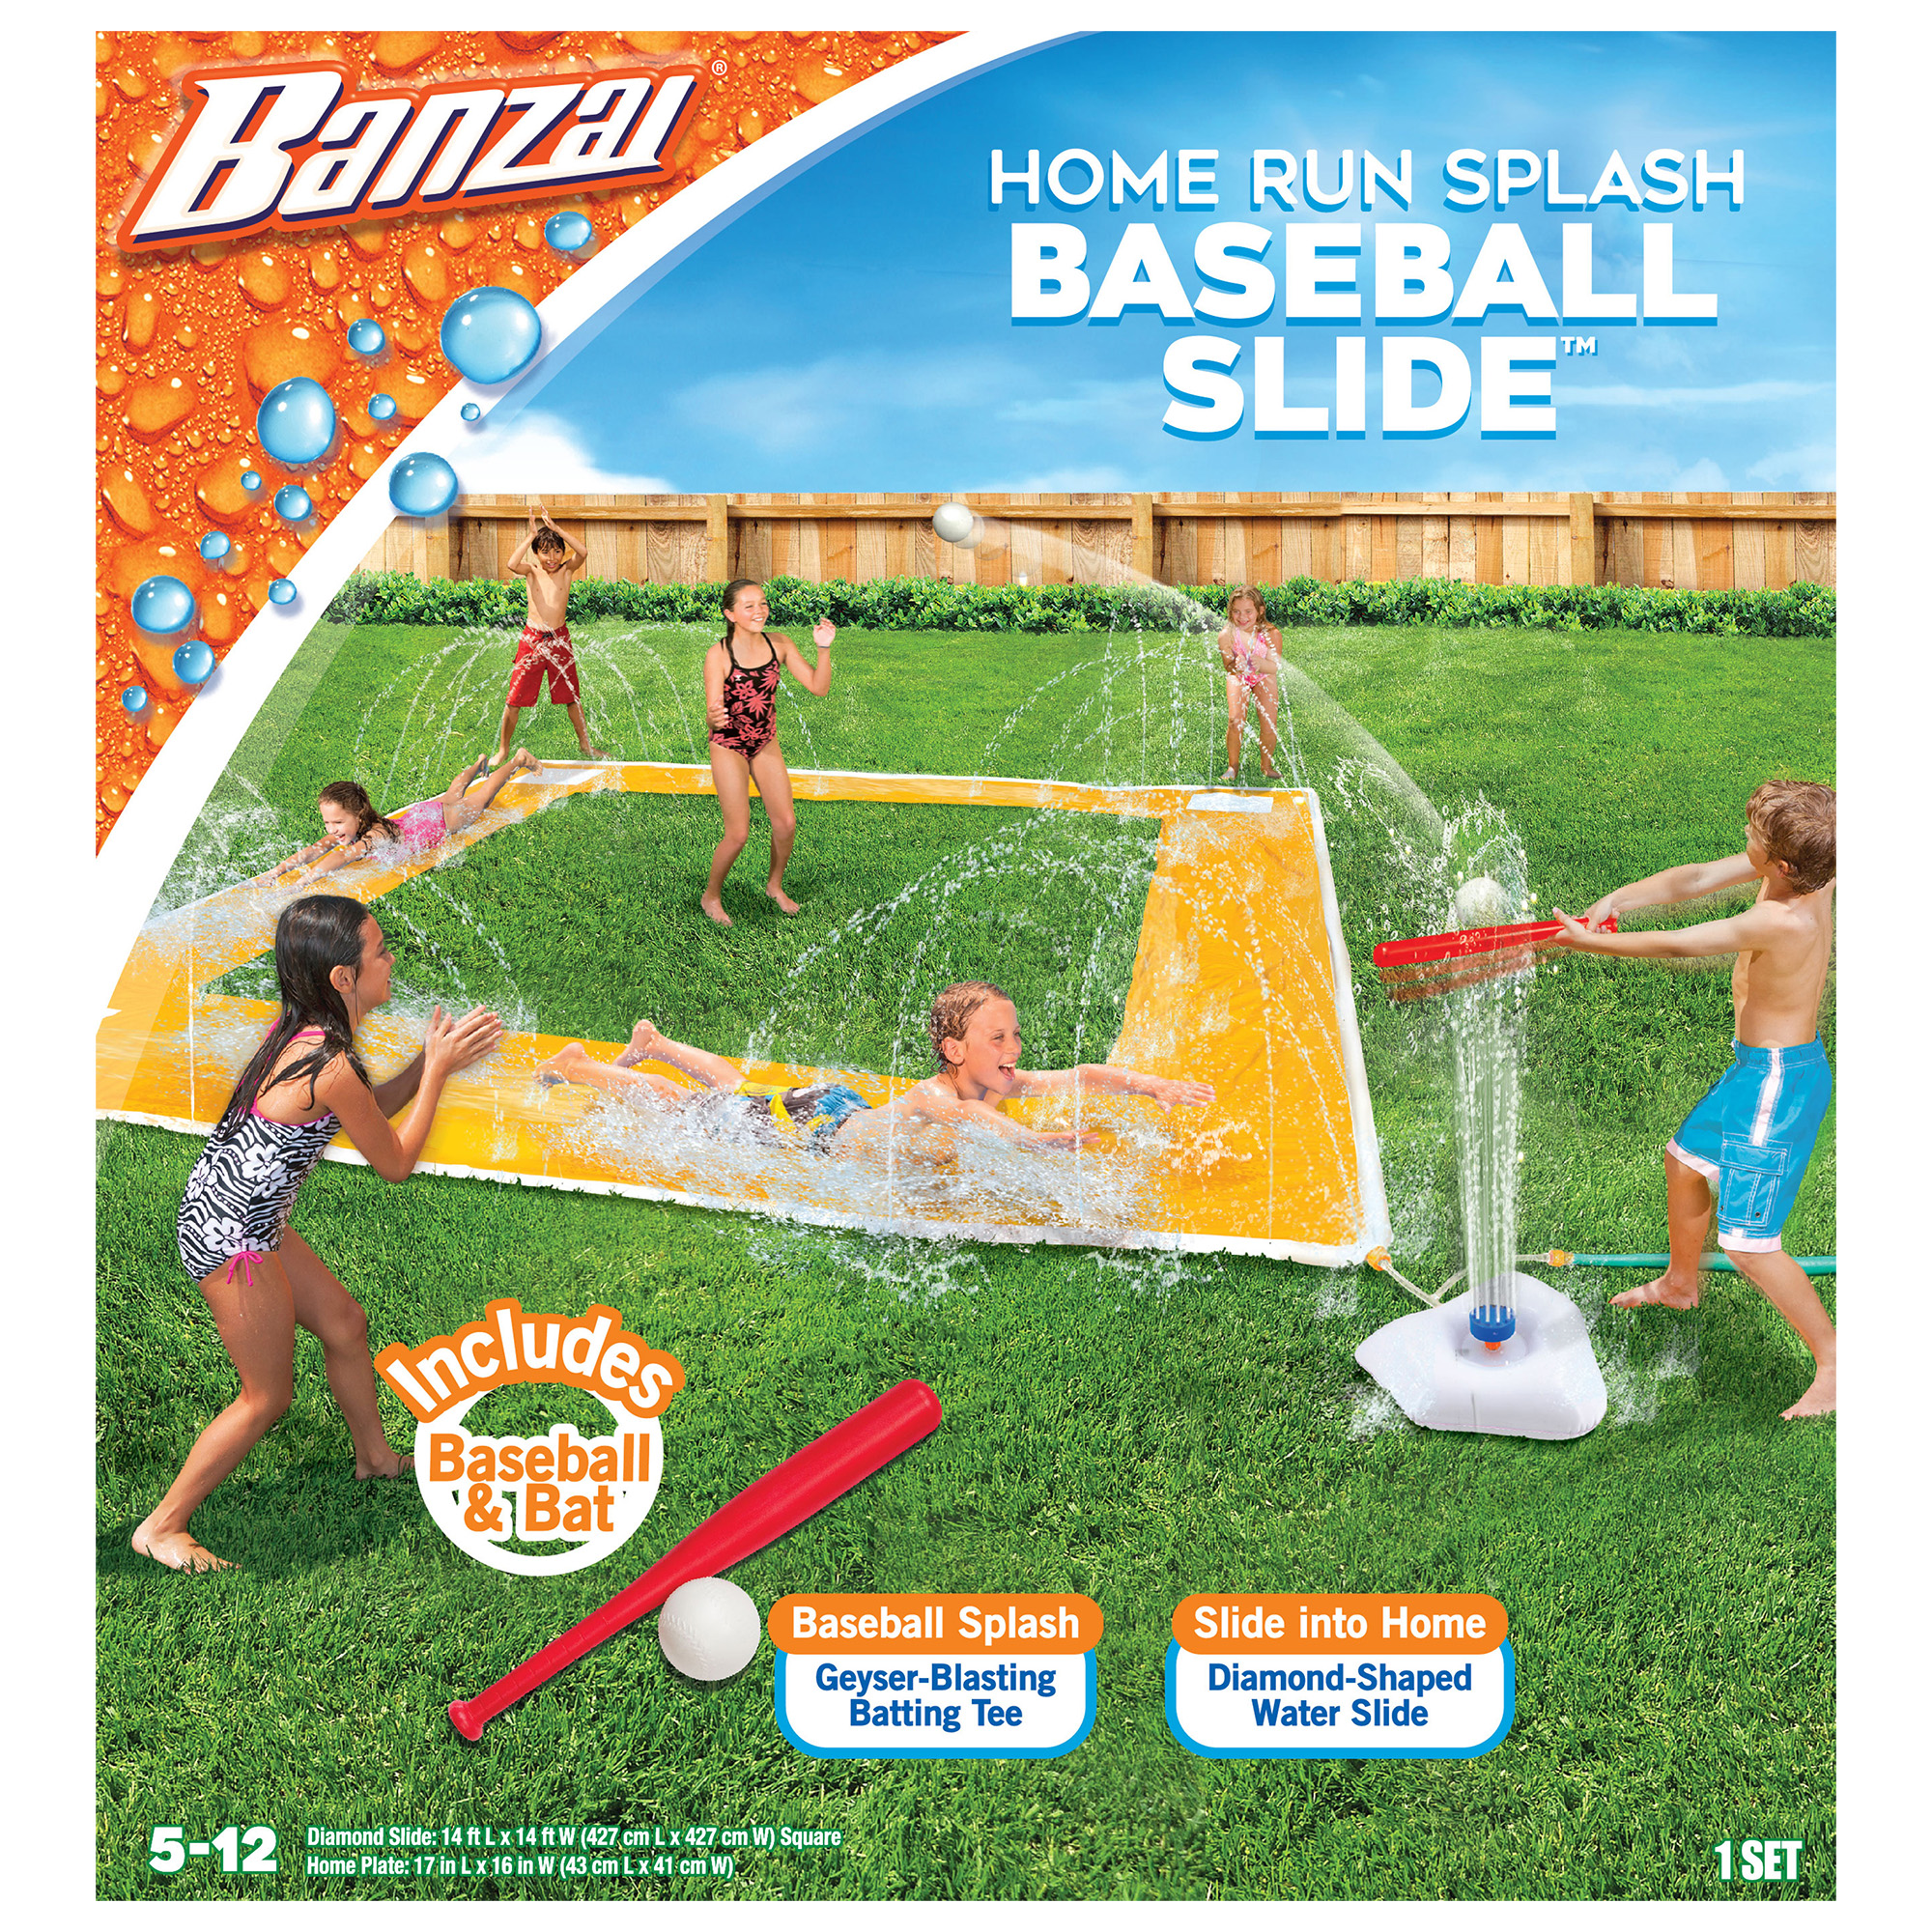 Banzai Home Run Splash Baseball Slide Kids 14 feet x 14 feet Backyard Summer Fun, Ages 5+ - image 2 of 8